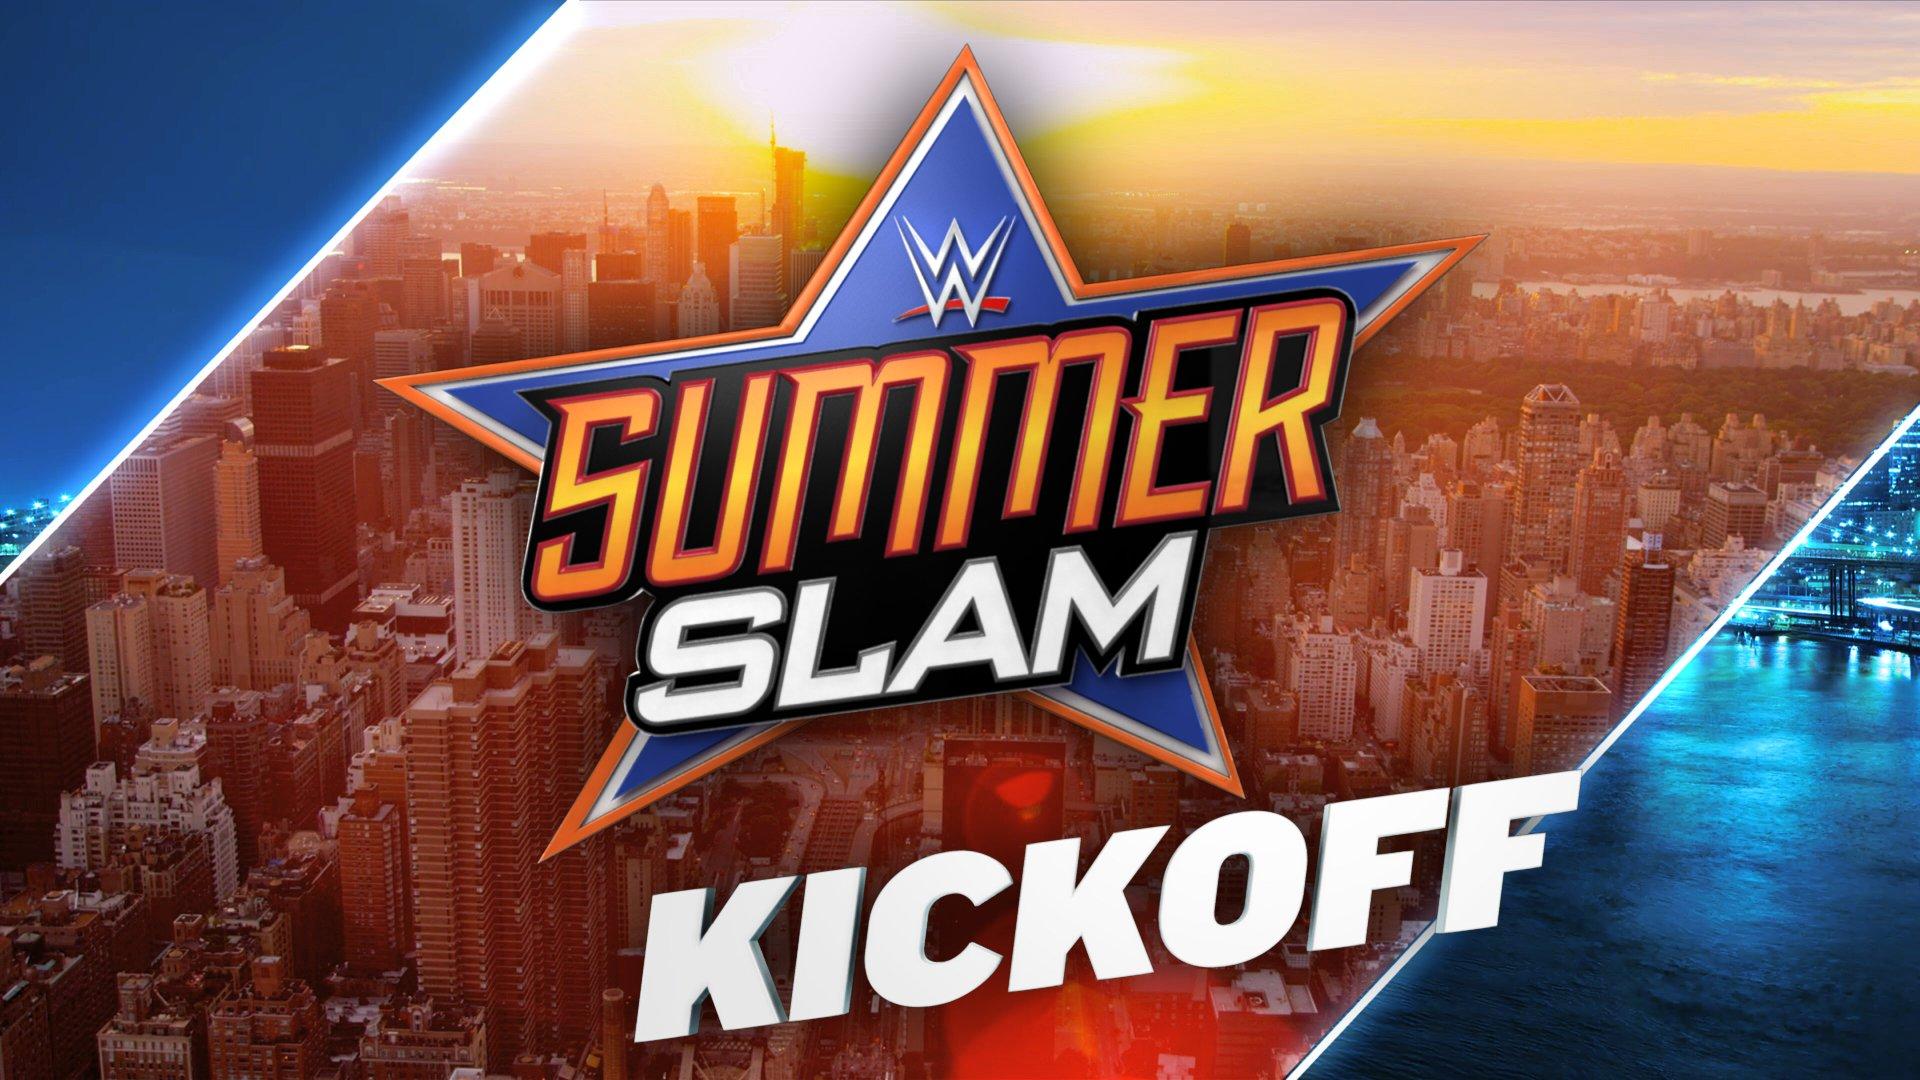 WWE SummerSlam 2015 Kickoff